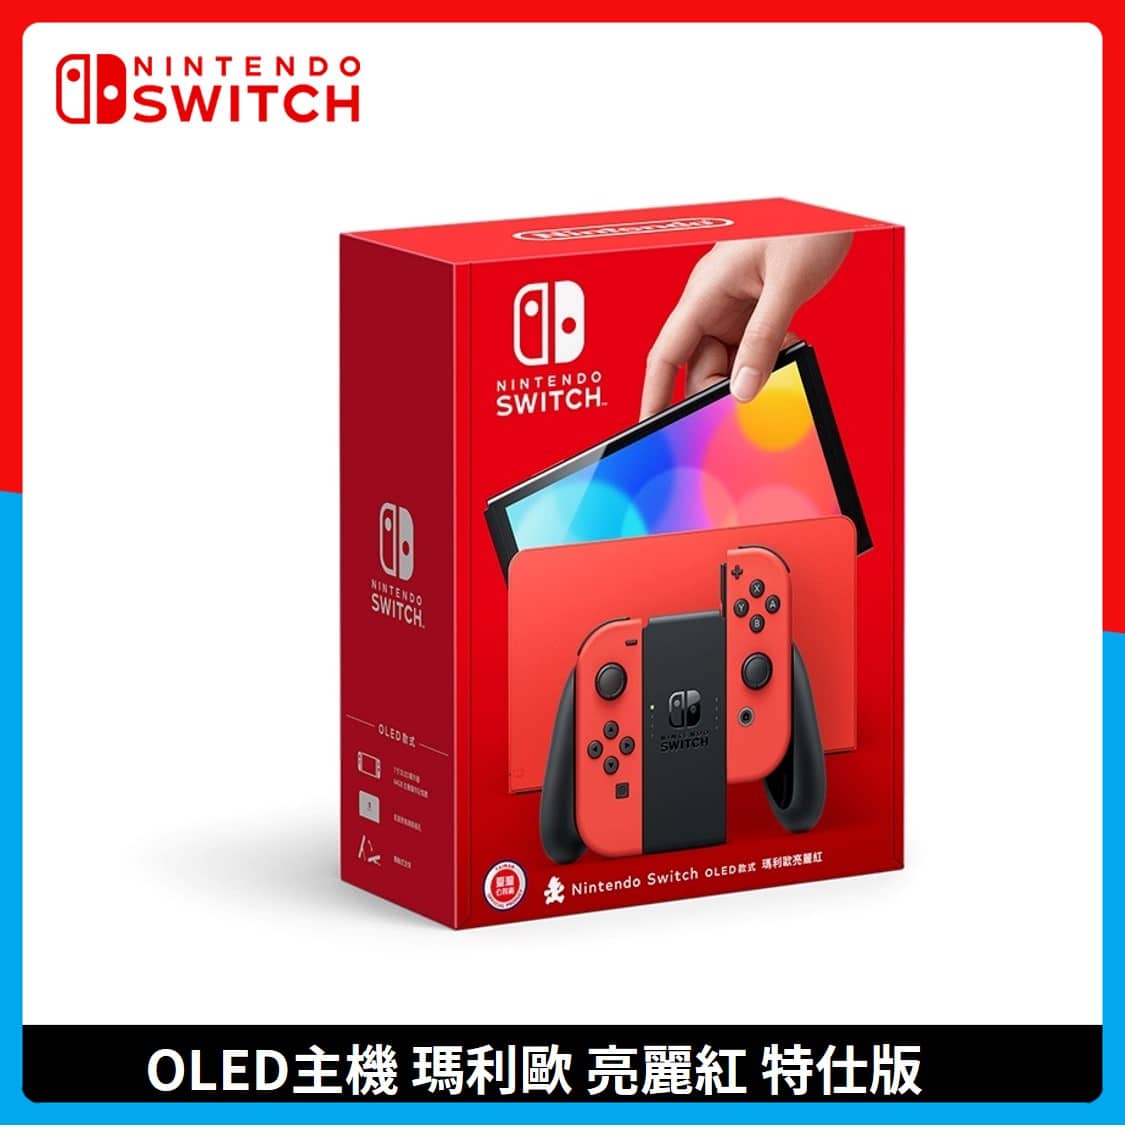 Nintendo Switch】OLED主機瑪利歐驚奇組合| 法雅客網路商店